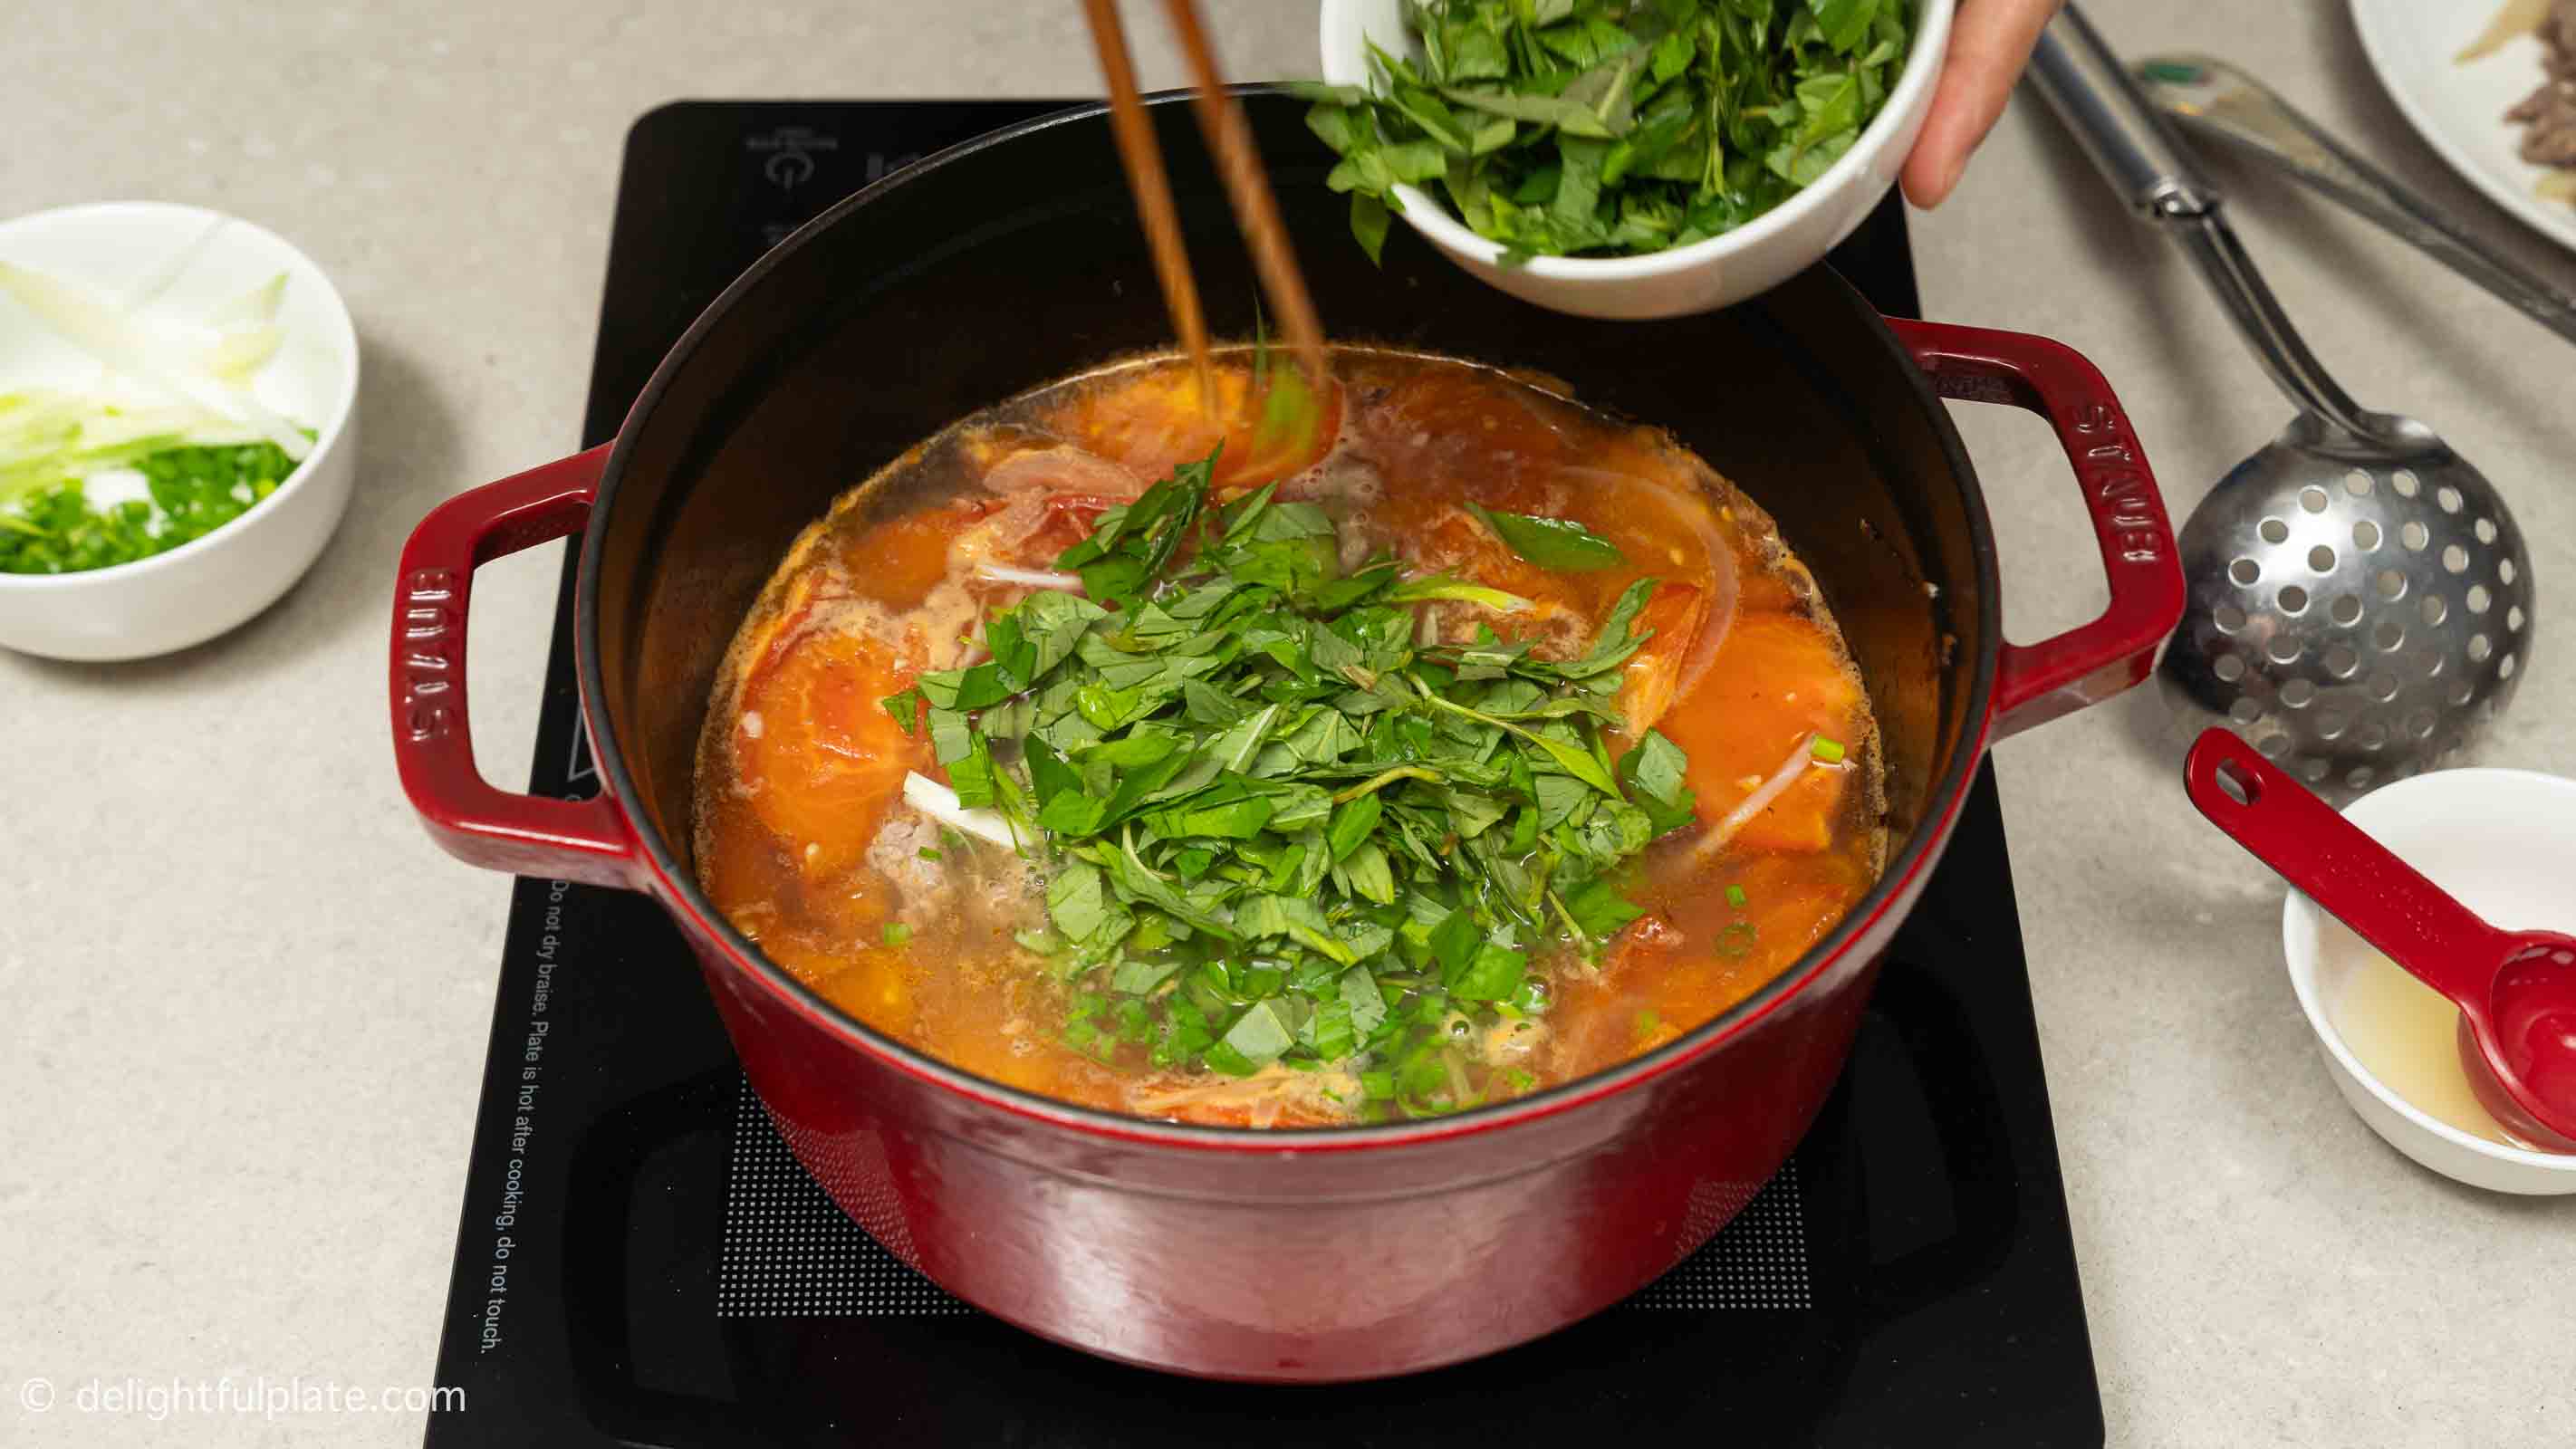 Adding Vietnamese coriander to the soup.